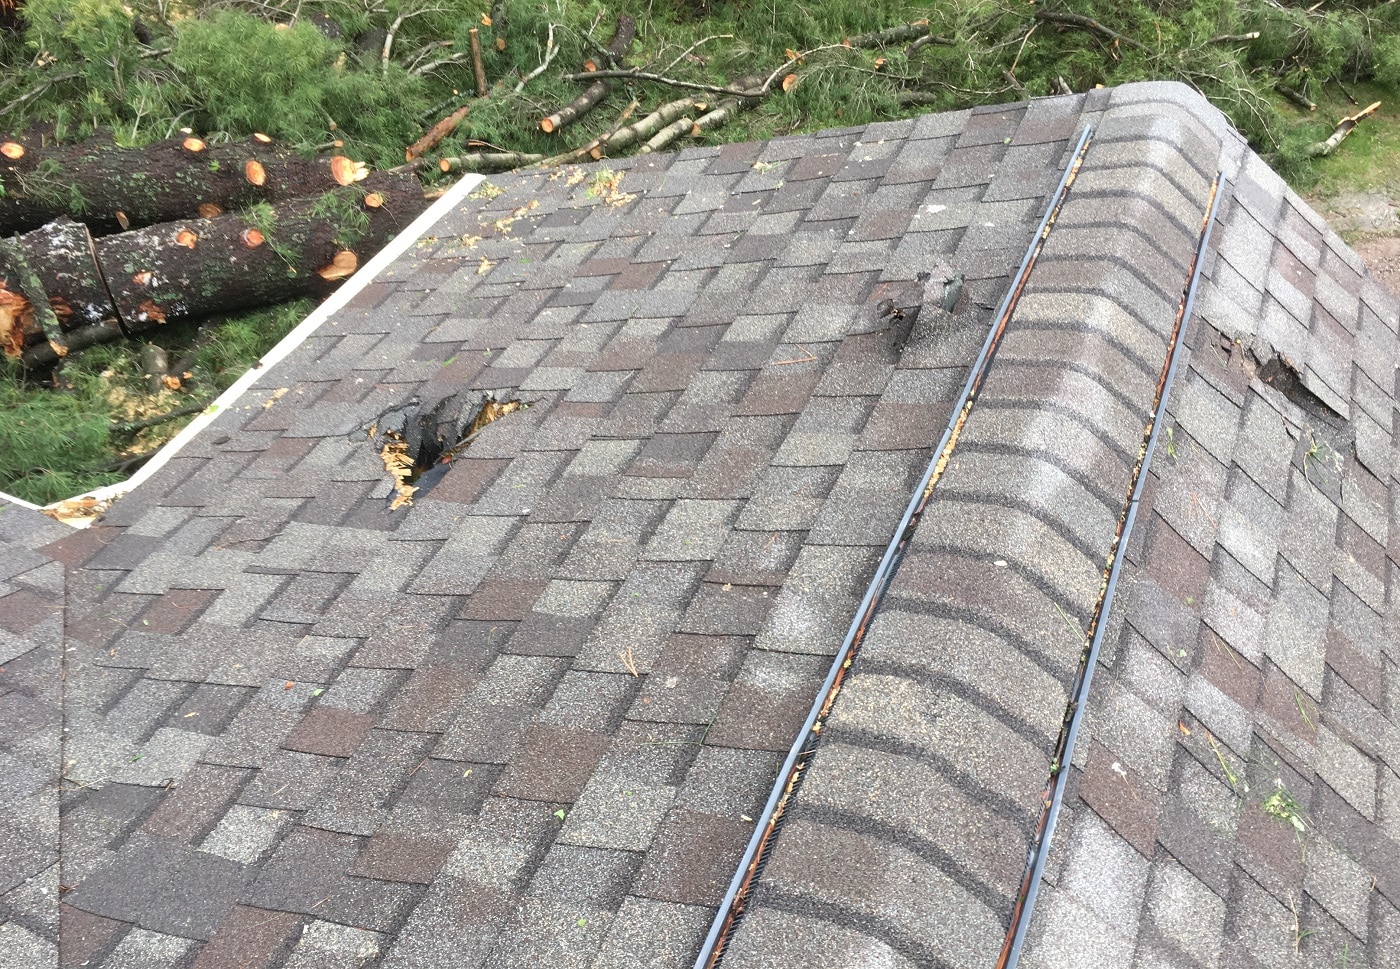 Asphalt Shingle Roof With Storm Damage